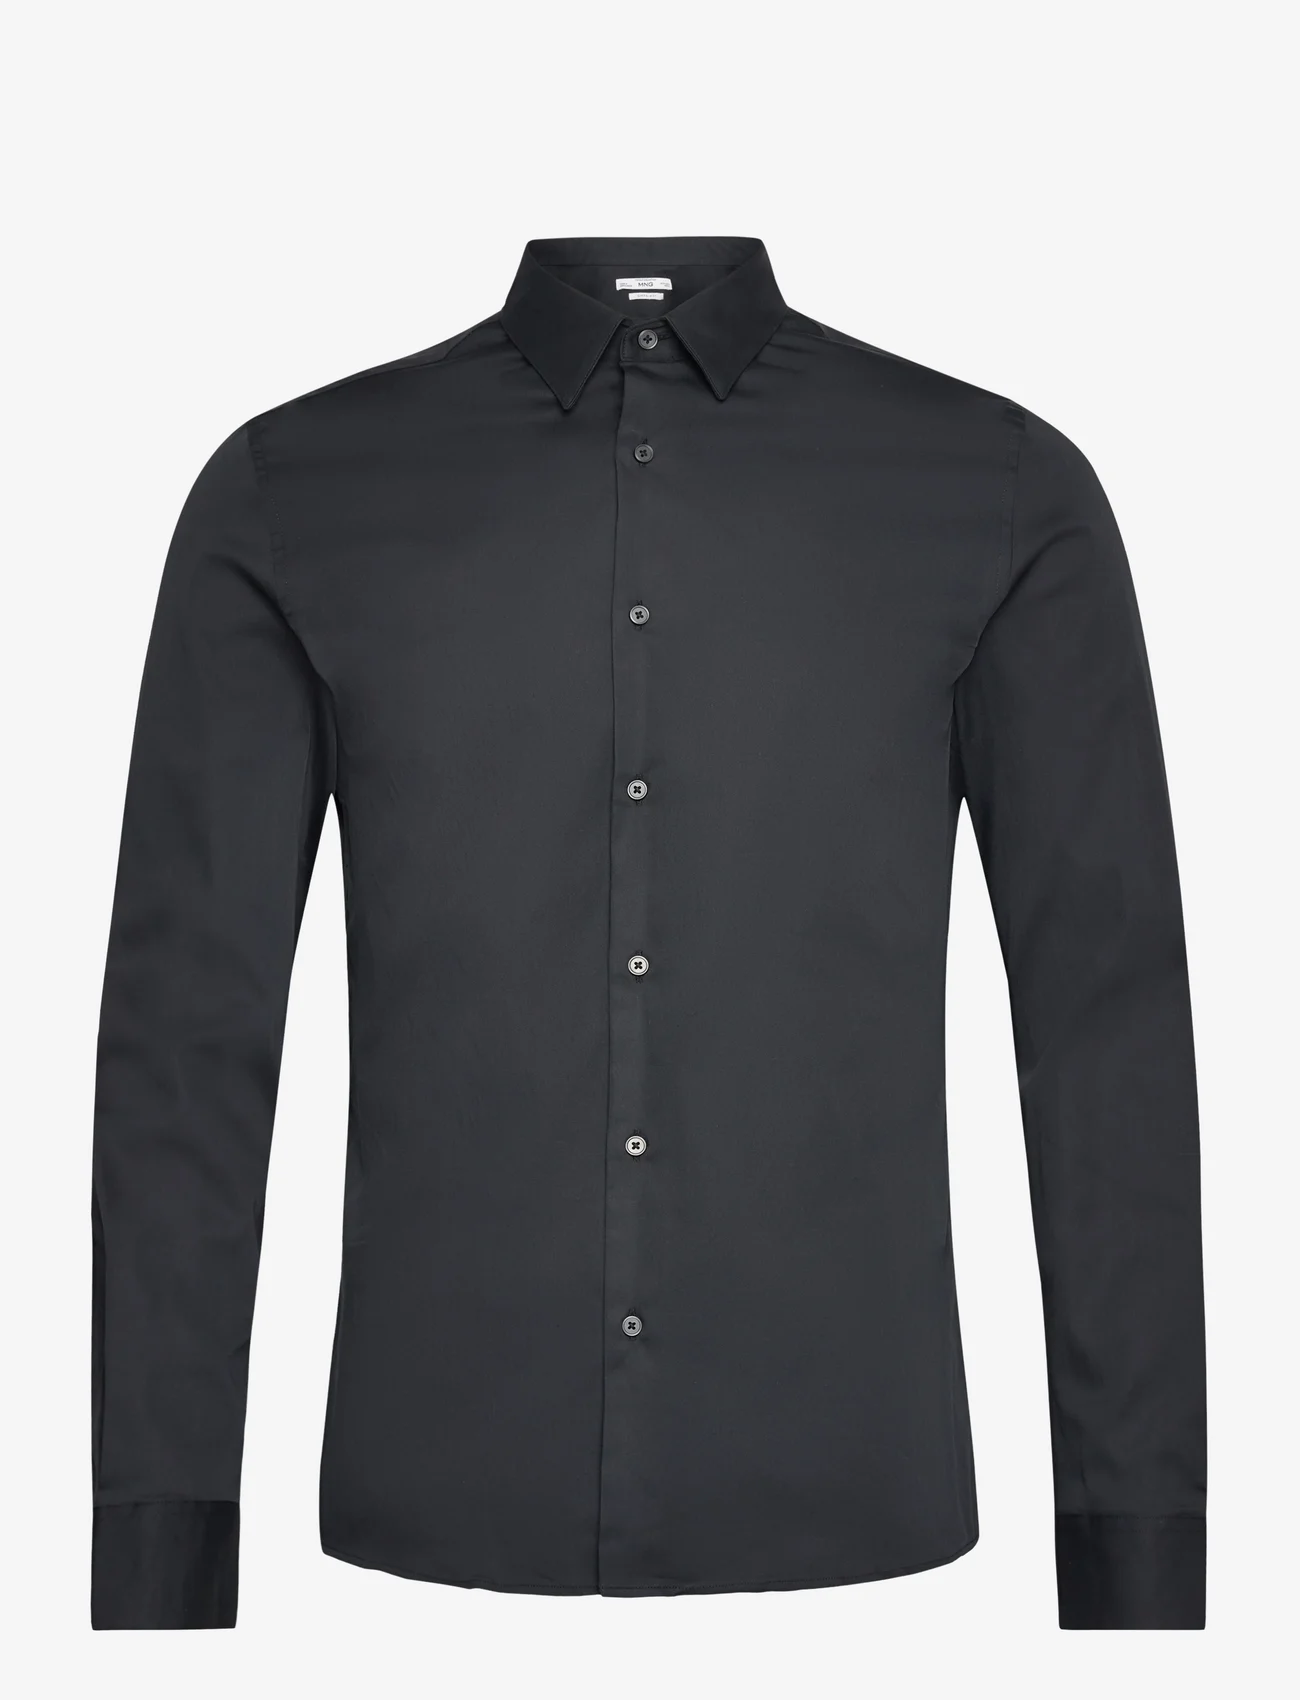 Mango - Super slim-fit poplin suit shirt - basic skjortor - black - 0